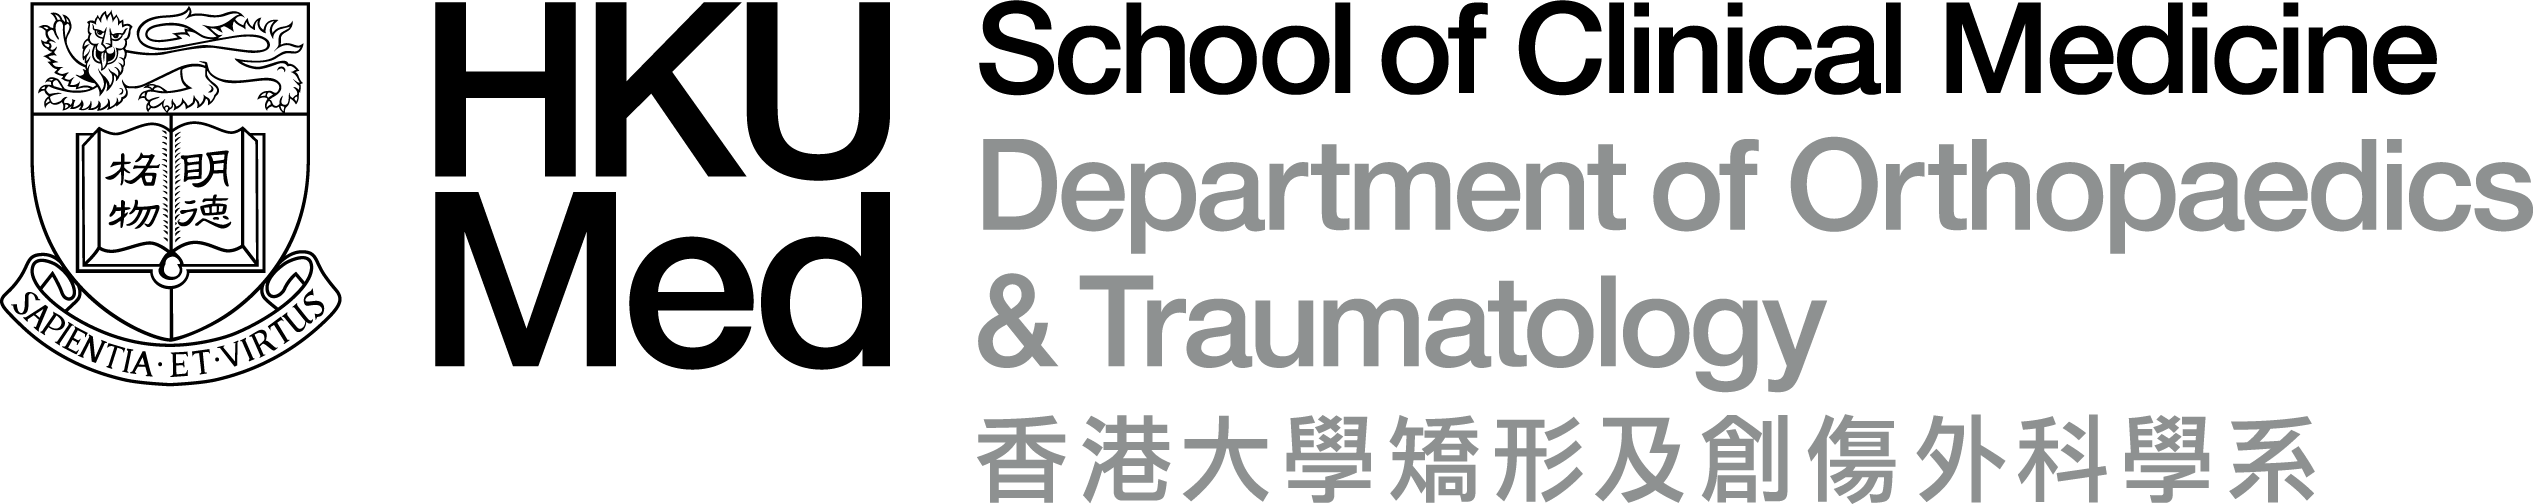 Department of Orthopaedics and Traumatology, The University of Hong Kong